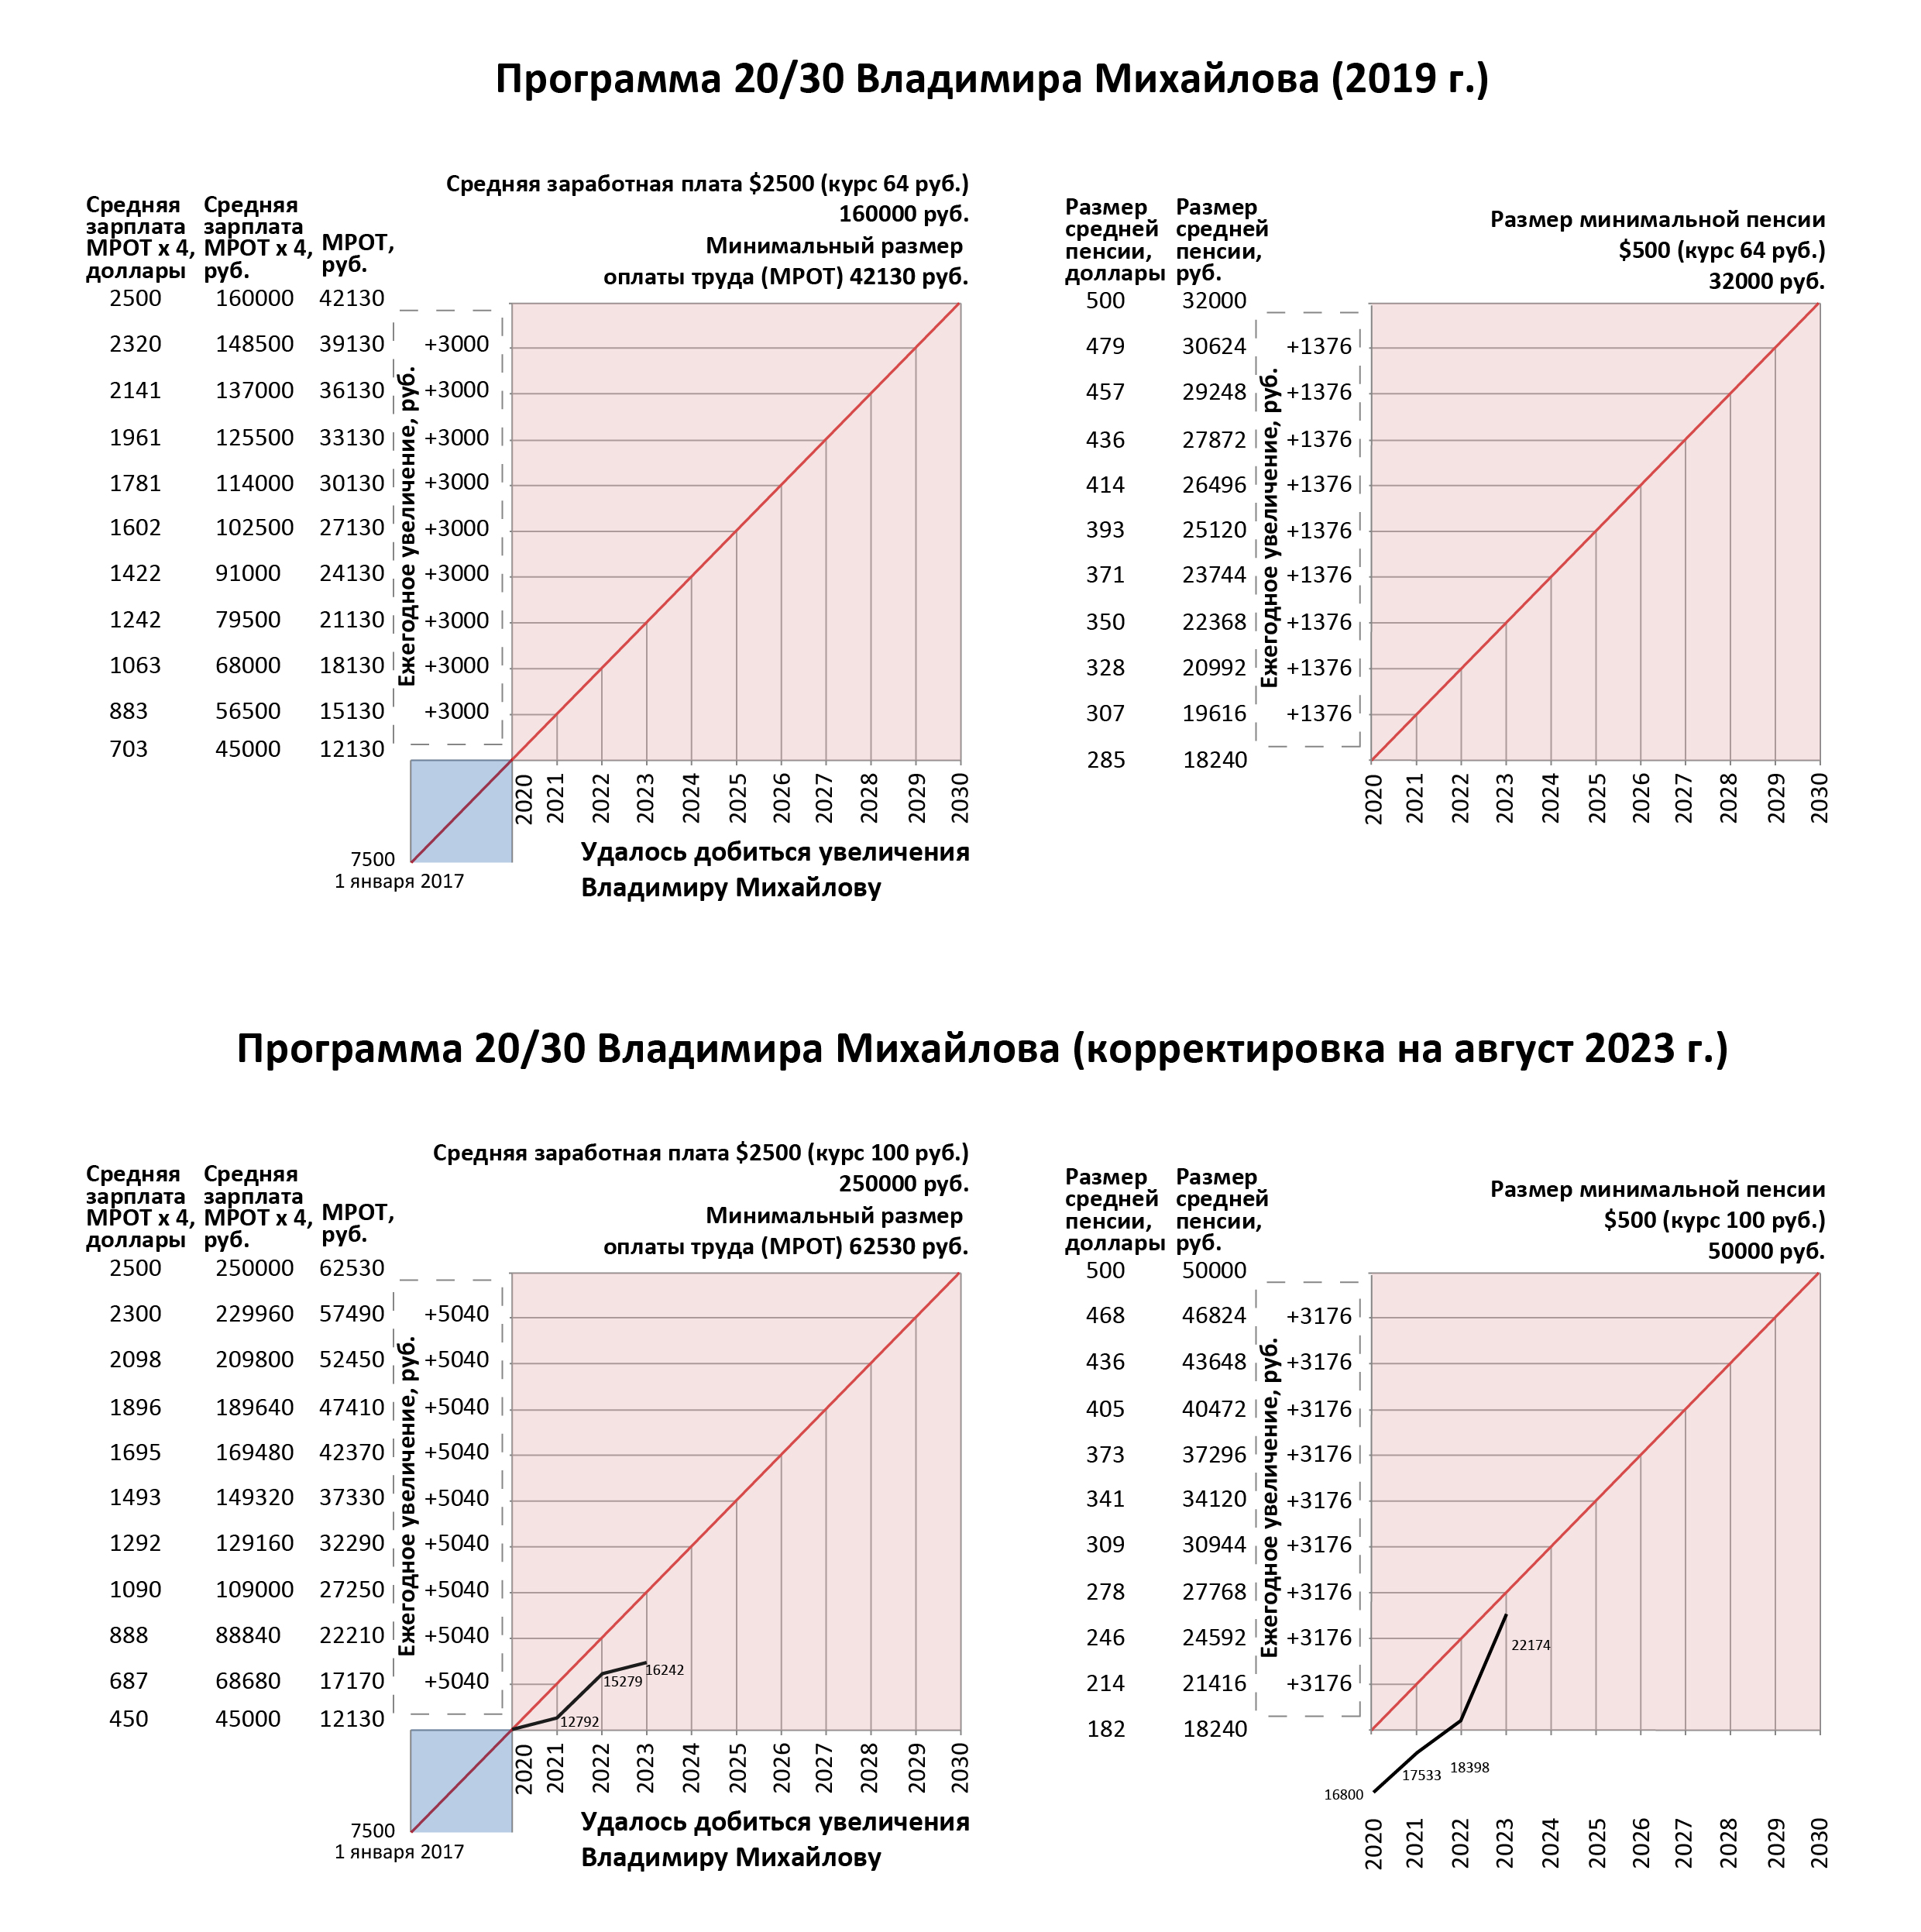 Программа В. Михайолова 2019 г., корректировка на 2023г.